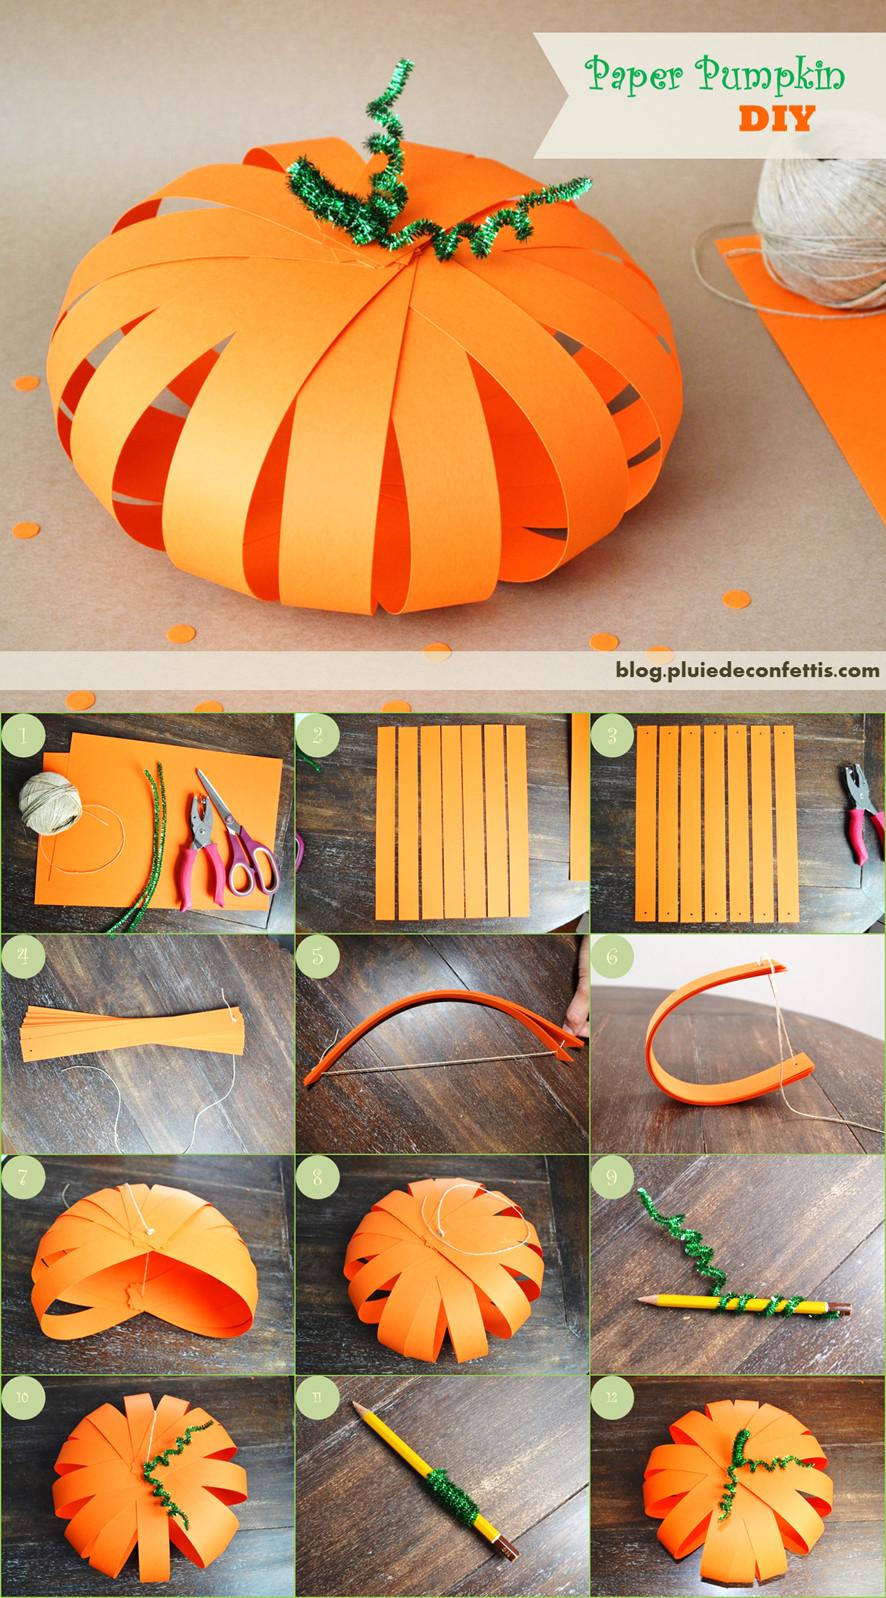 DIY Halloween Crafts For Toddlers
 Diy citrouille en papier pour Halloween